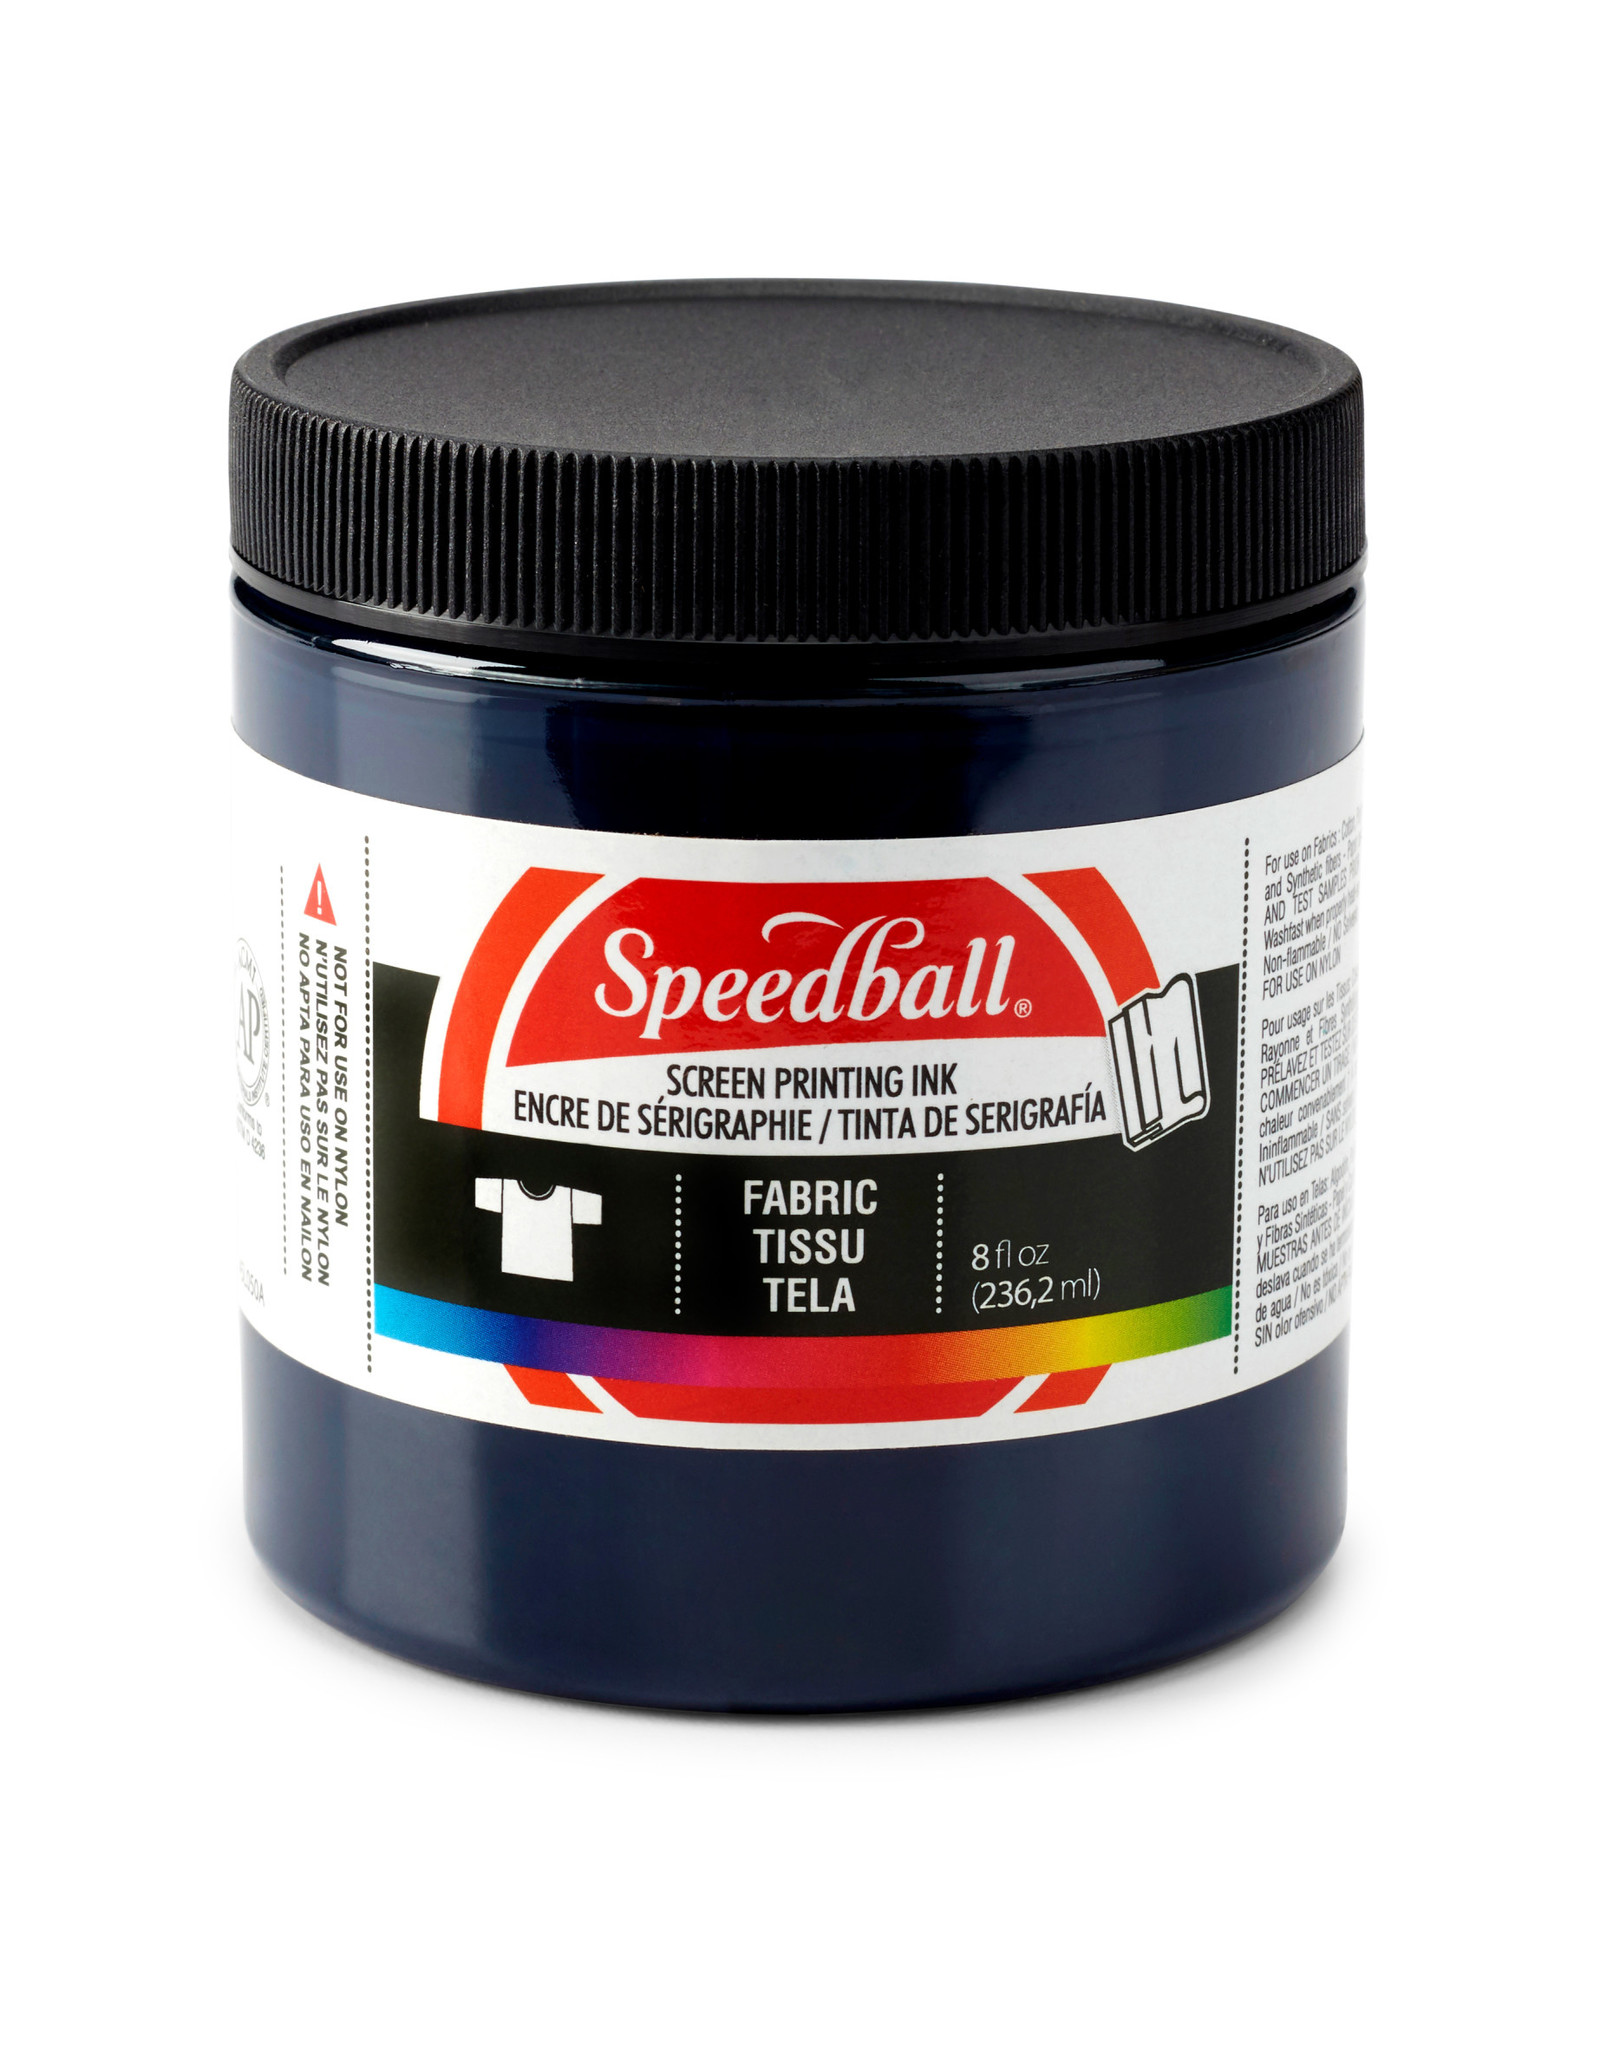 SPEEDBALL ART PRODUCTS Speedball Fabric Screen Printing Ink, Blue Denim, 8oz